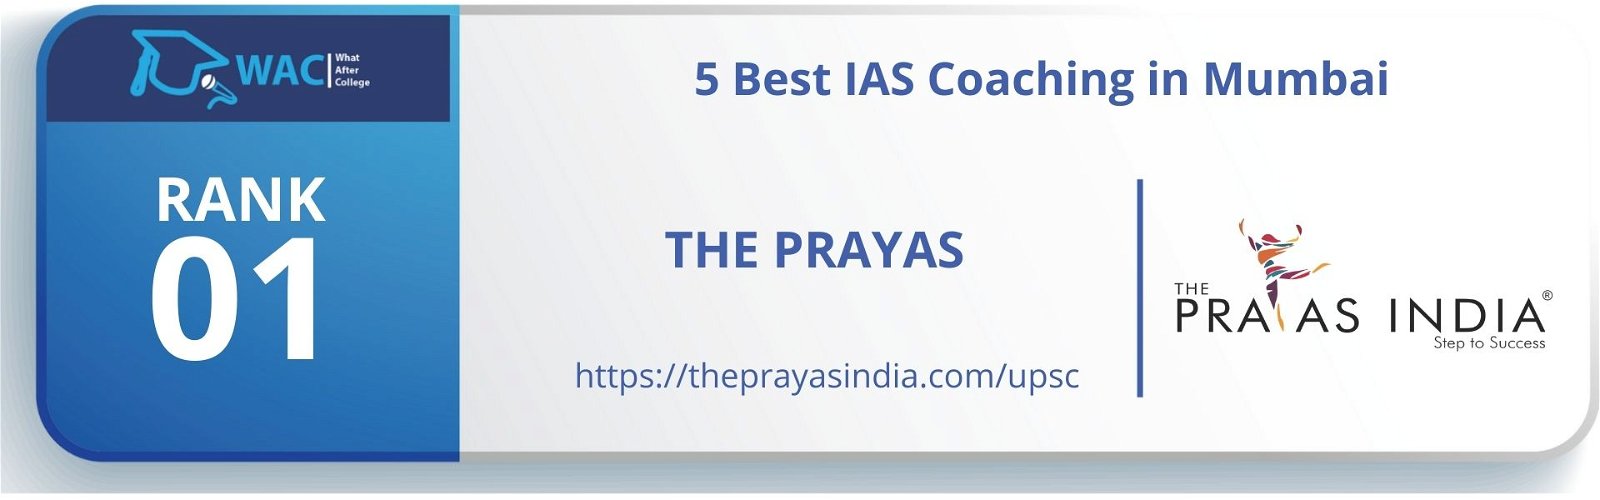 5 Best IAS Coaching in Mumbai - The Prayas India